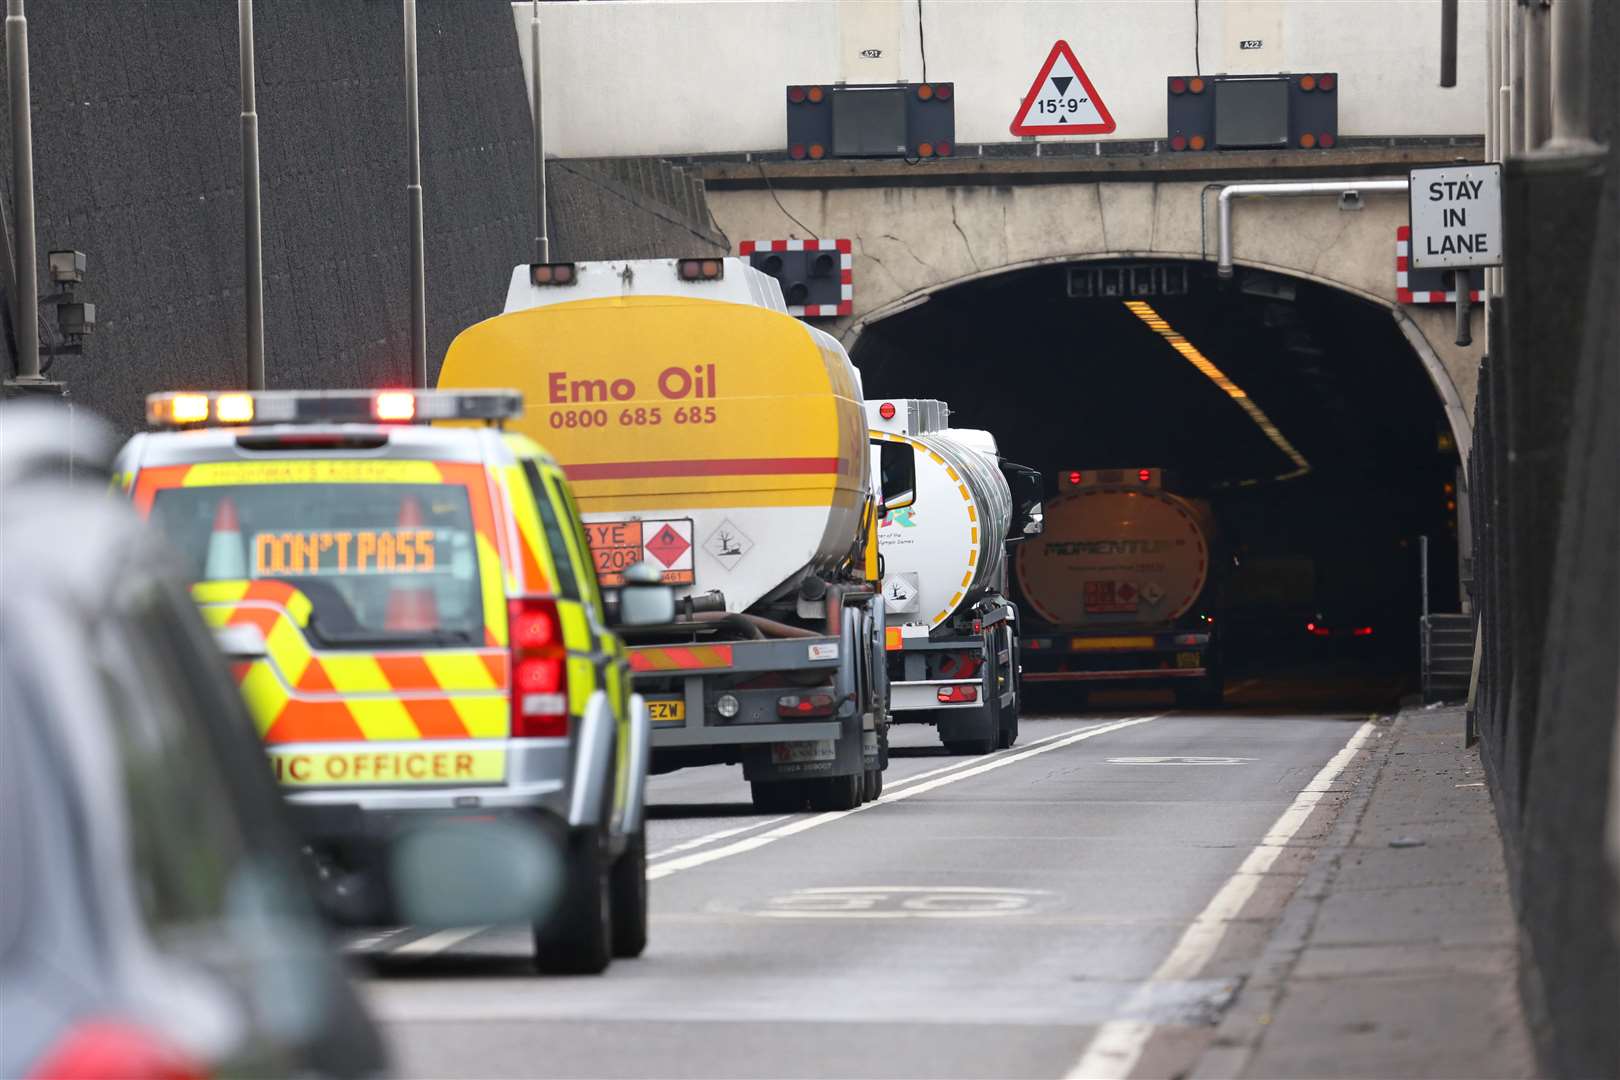 One of the Dartford tunnels has shut